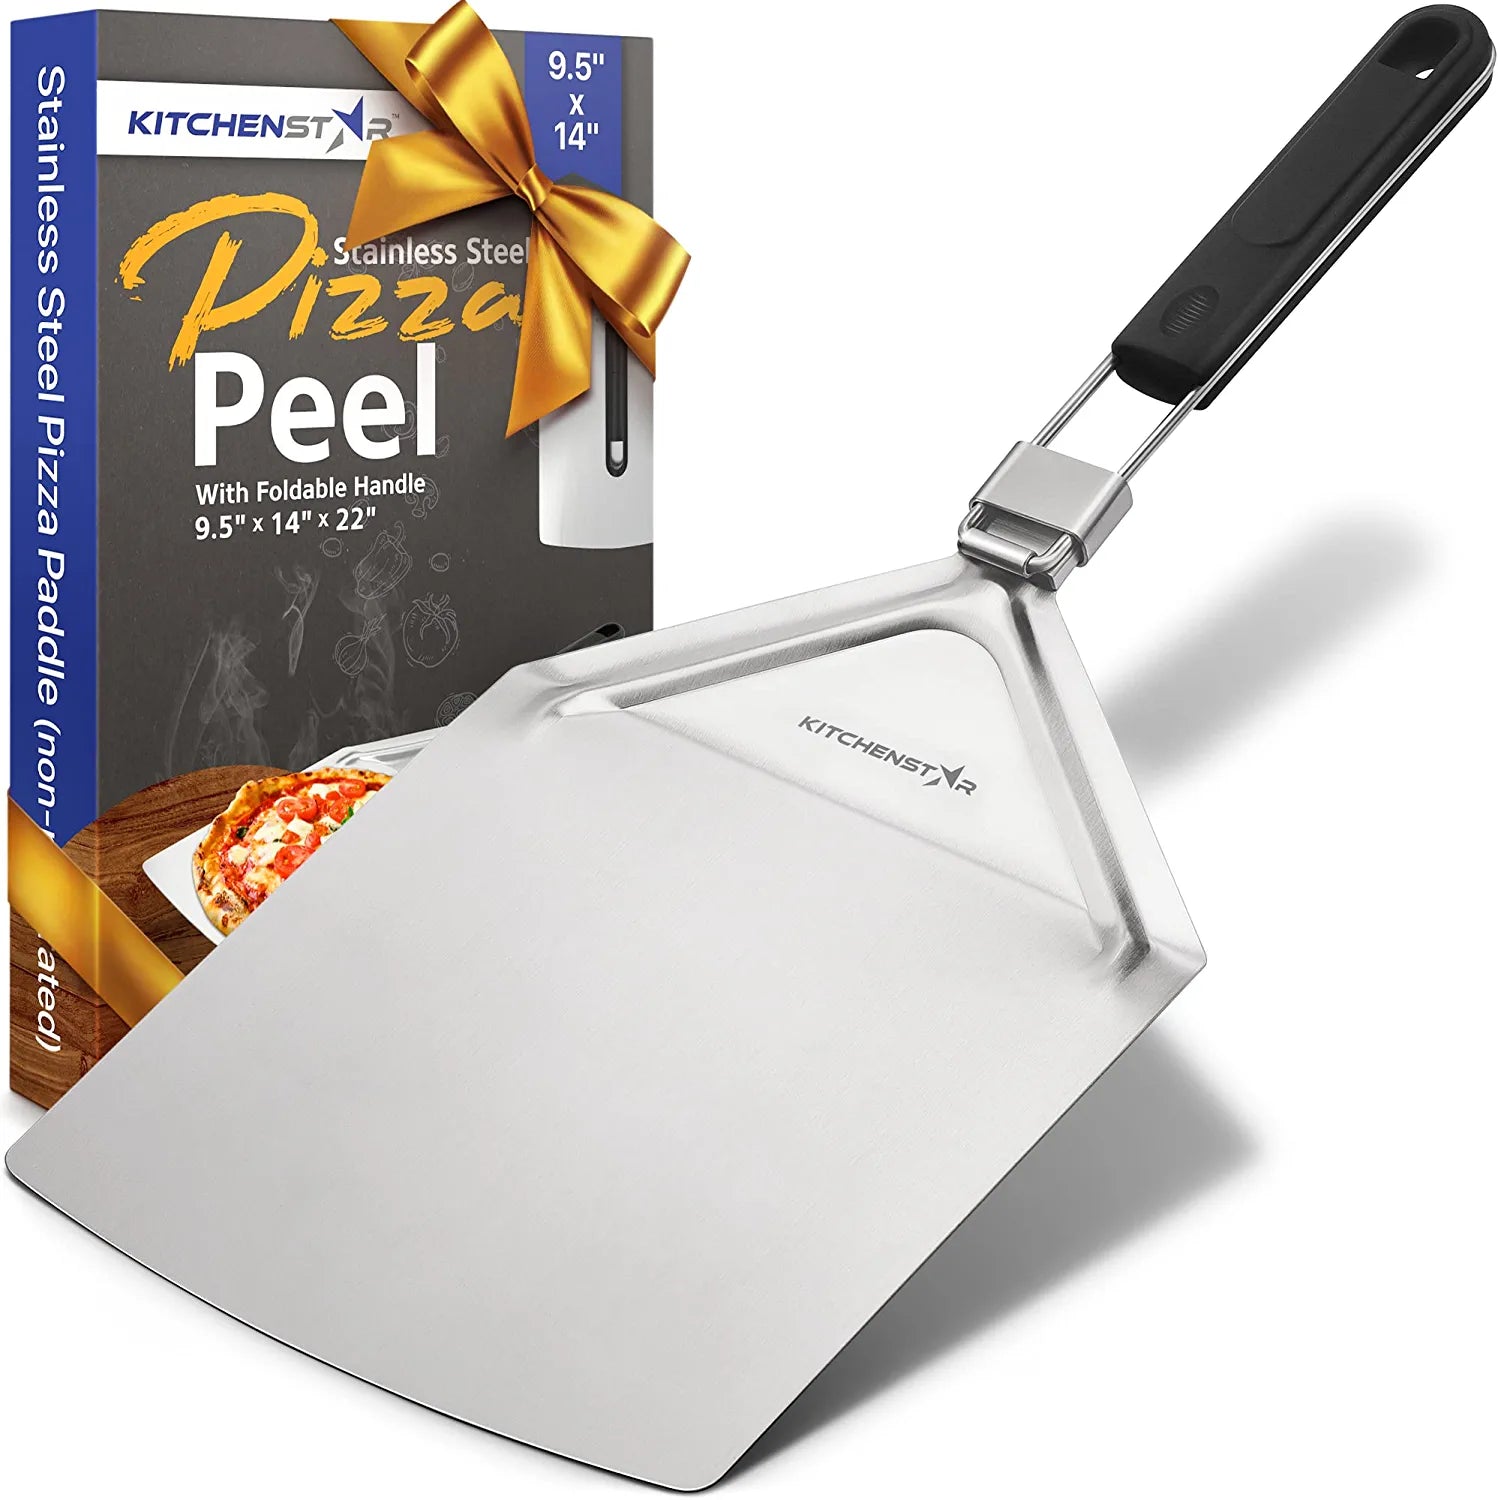 Small Spatula Stainless Steel Portable Flatbread Pizza Shovel